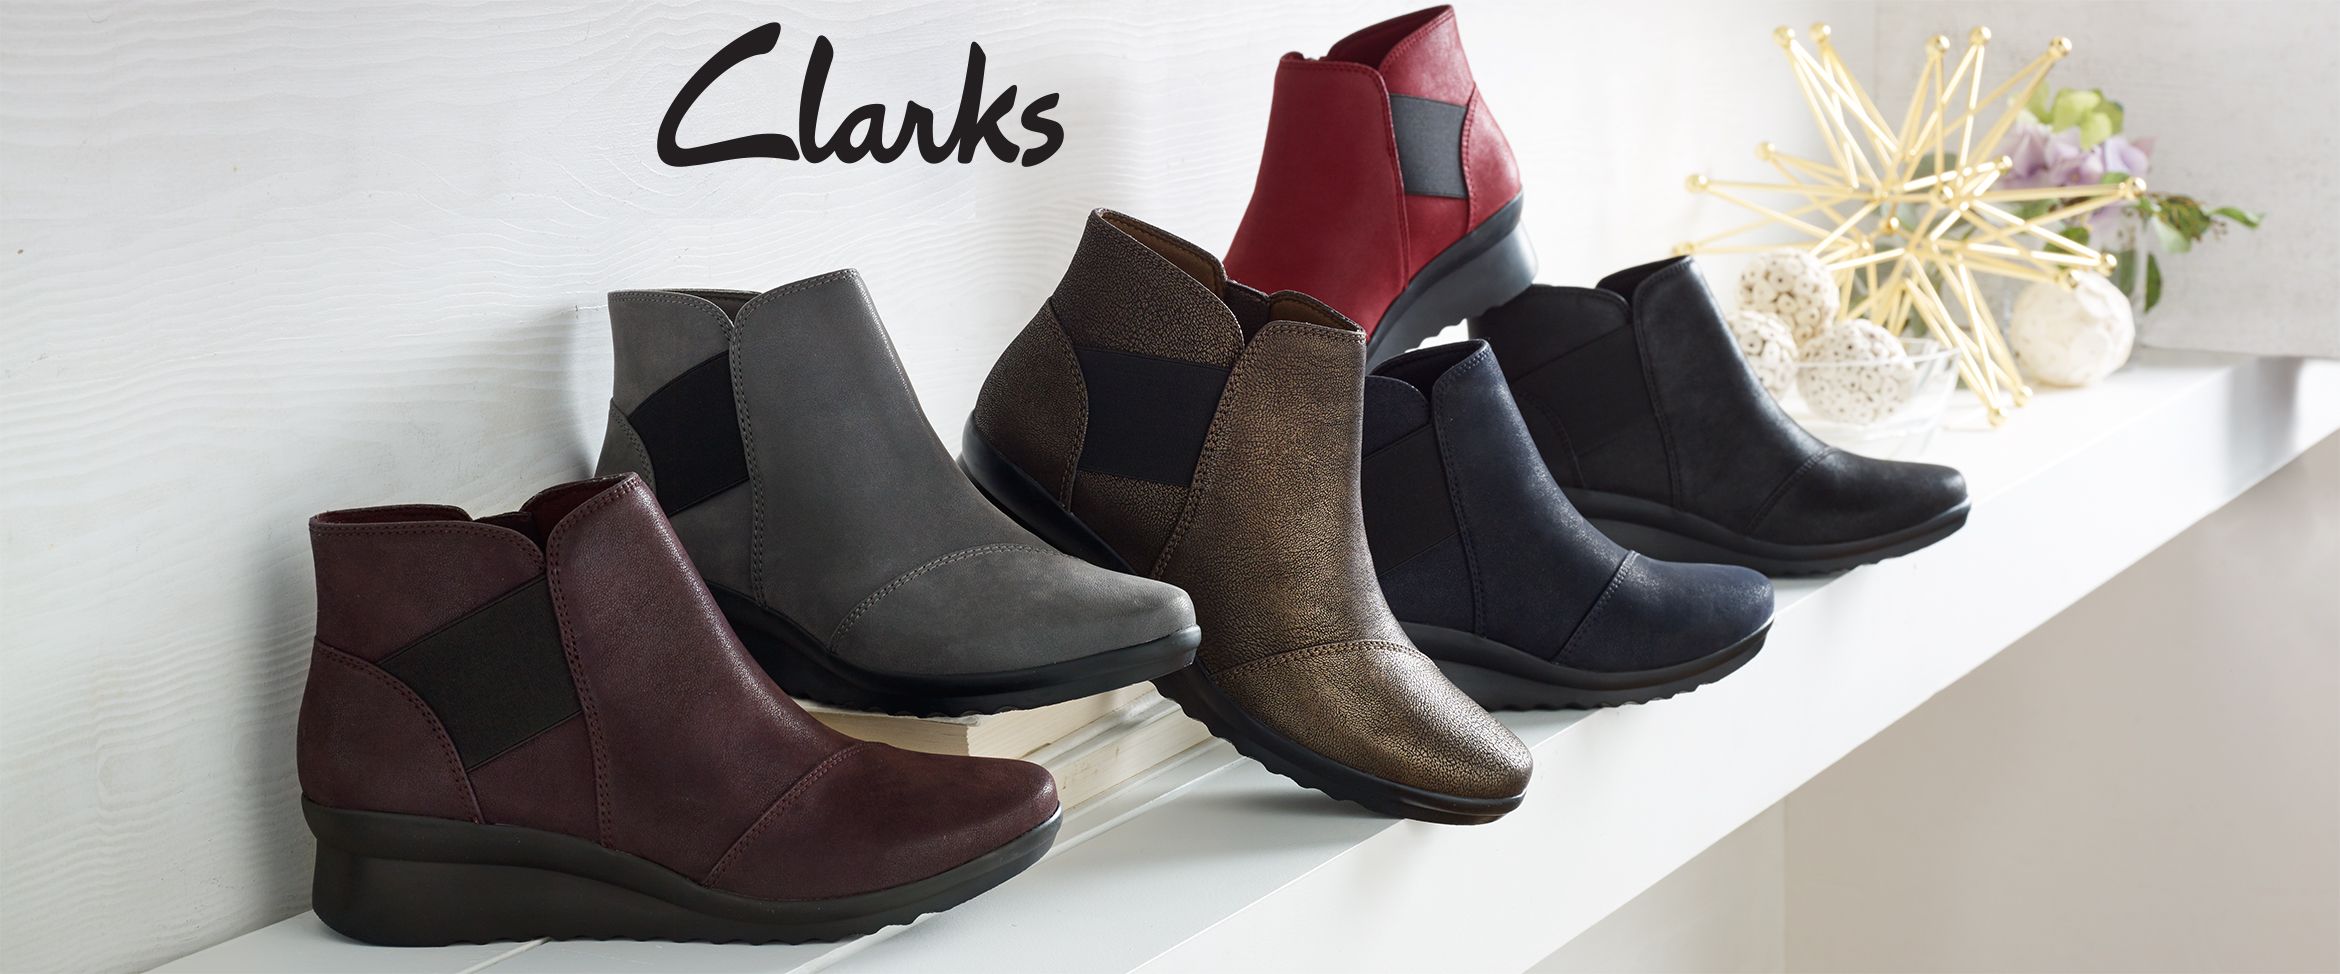 clark cloudsteppers boots